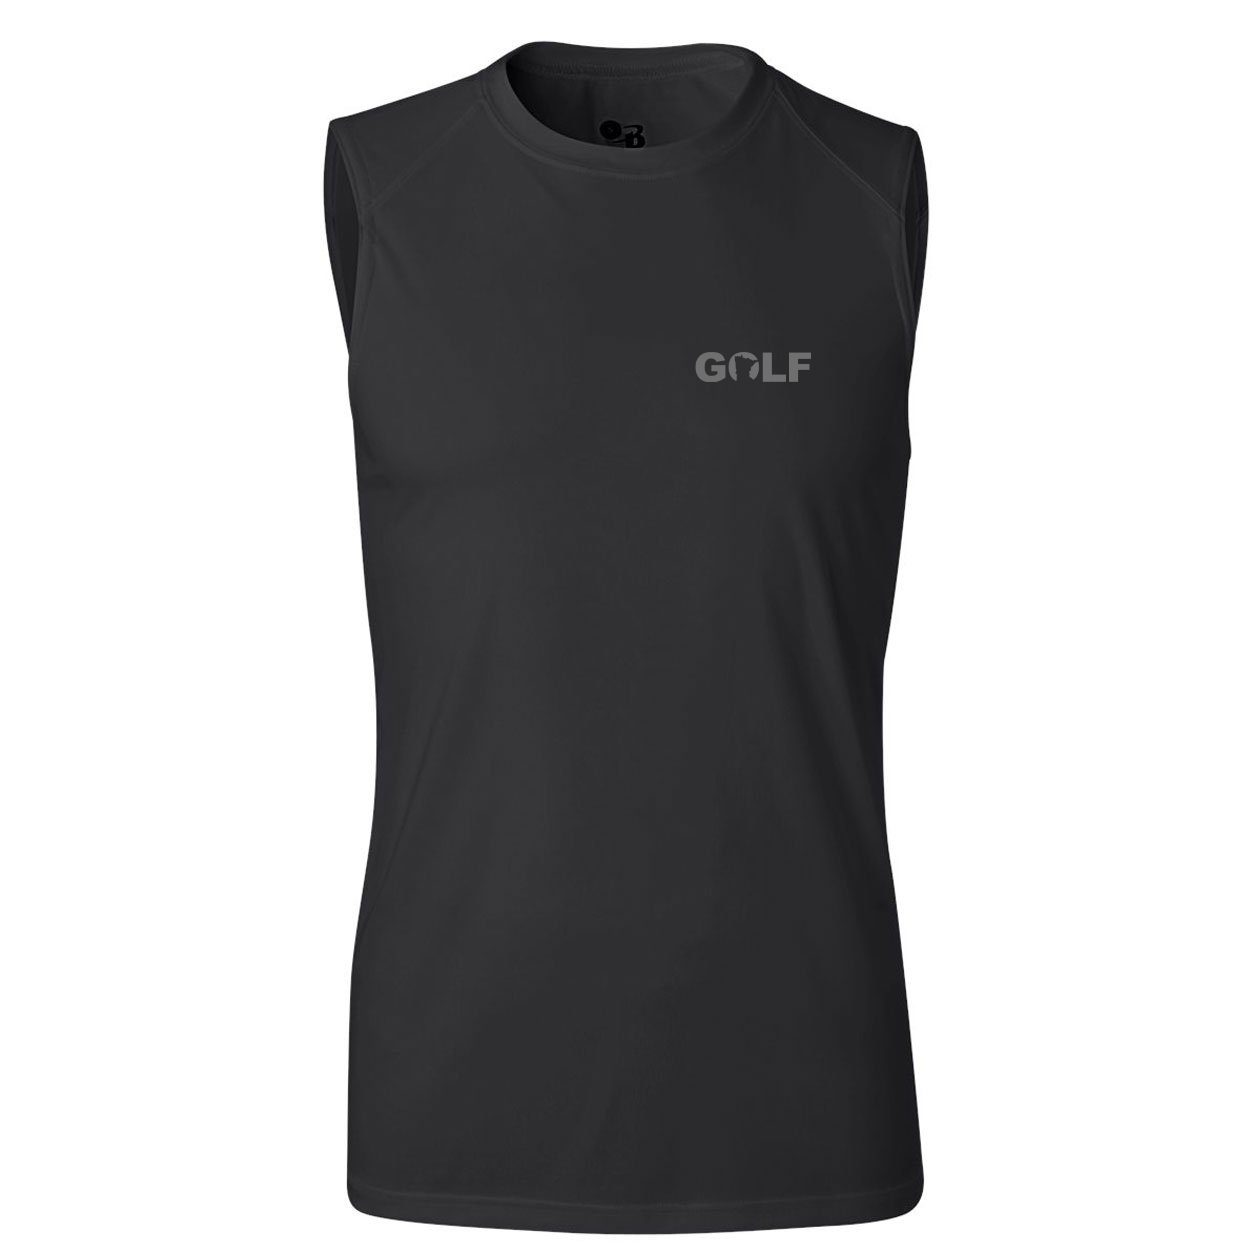 Golf Minnesota Night Out Unisex Performance Sleeveless T-Shirt Black (Gray Logo)